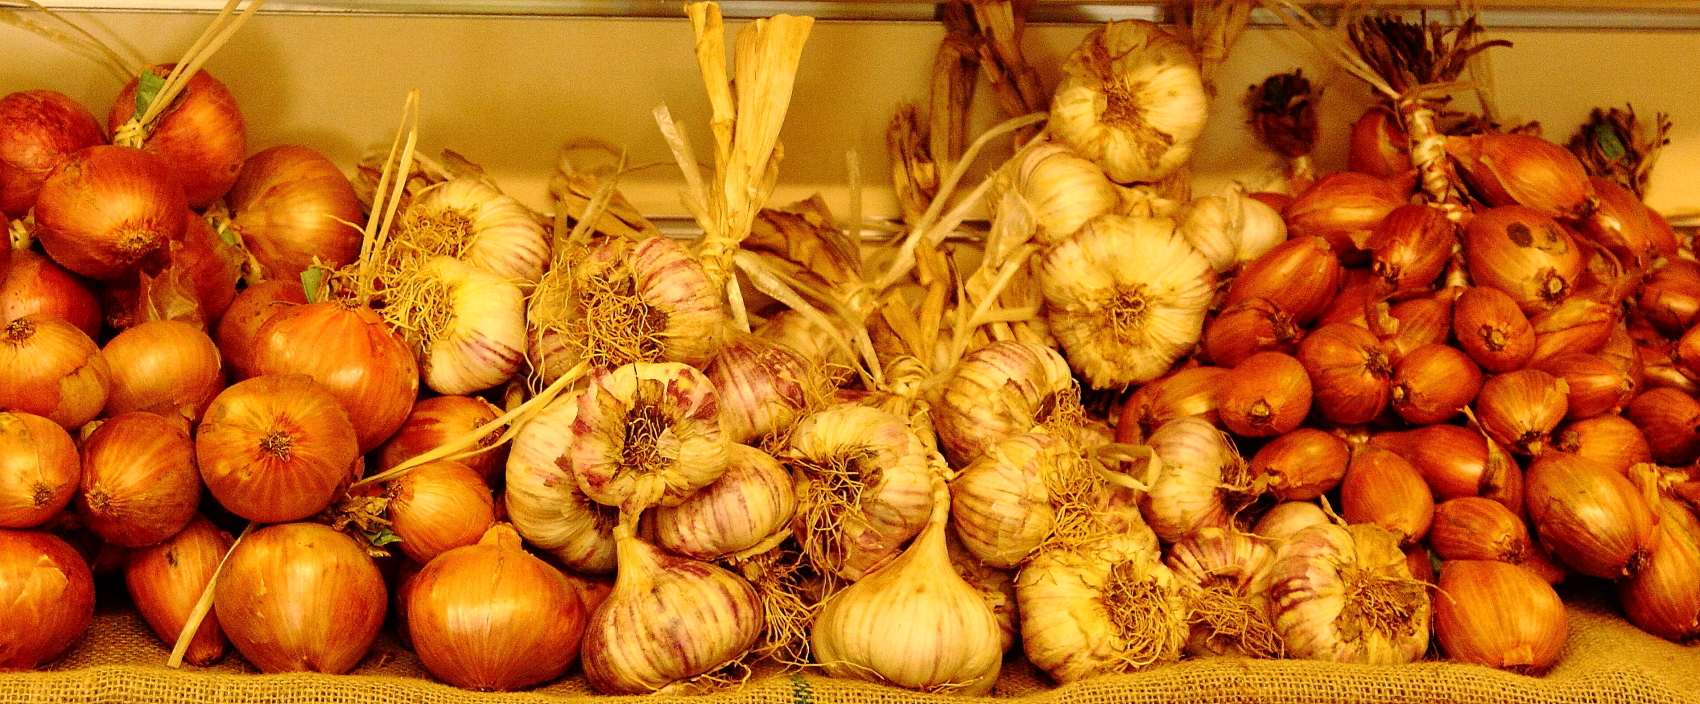 Roscoff Onions and Garlic